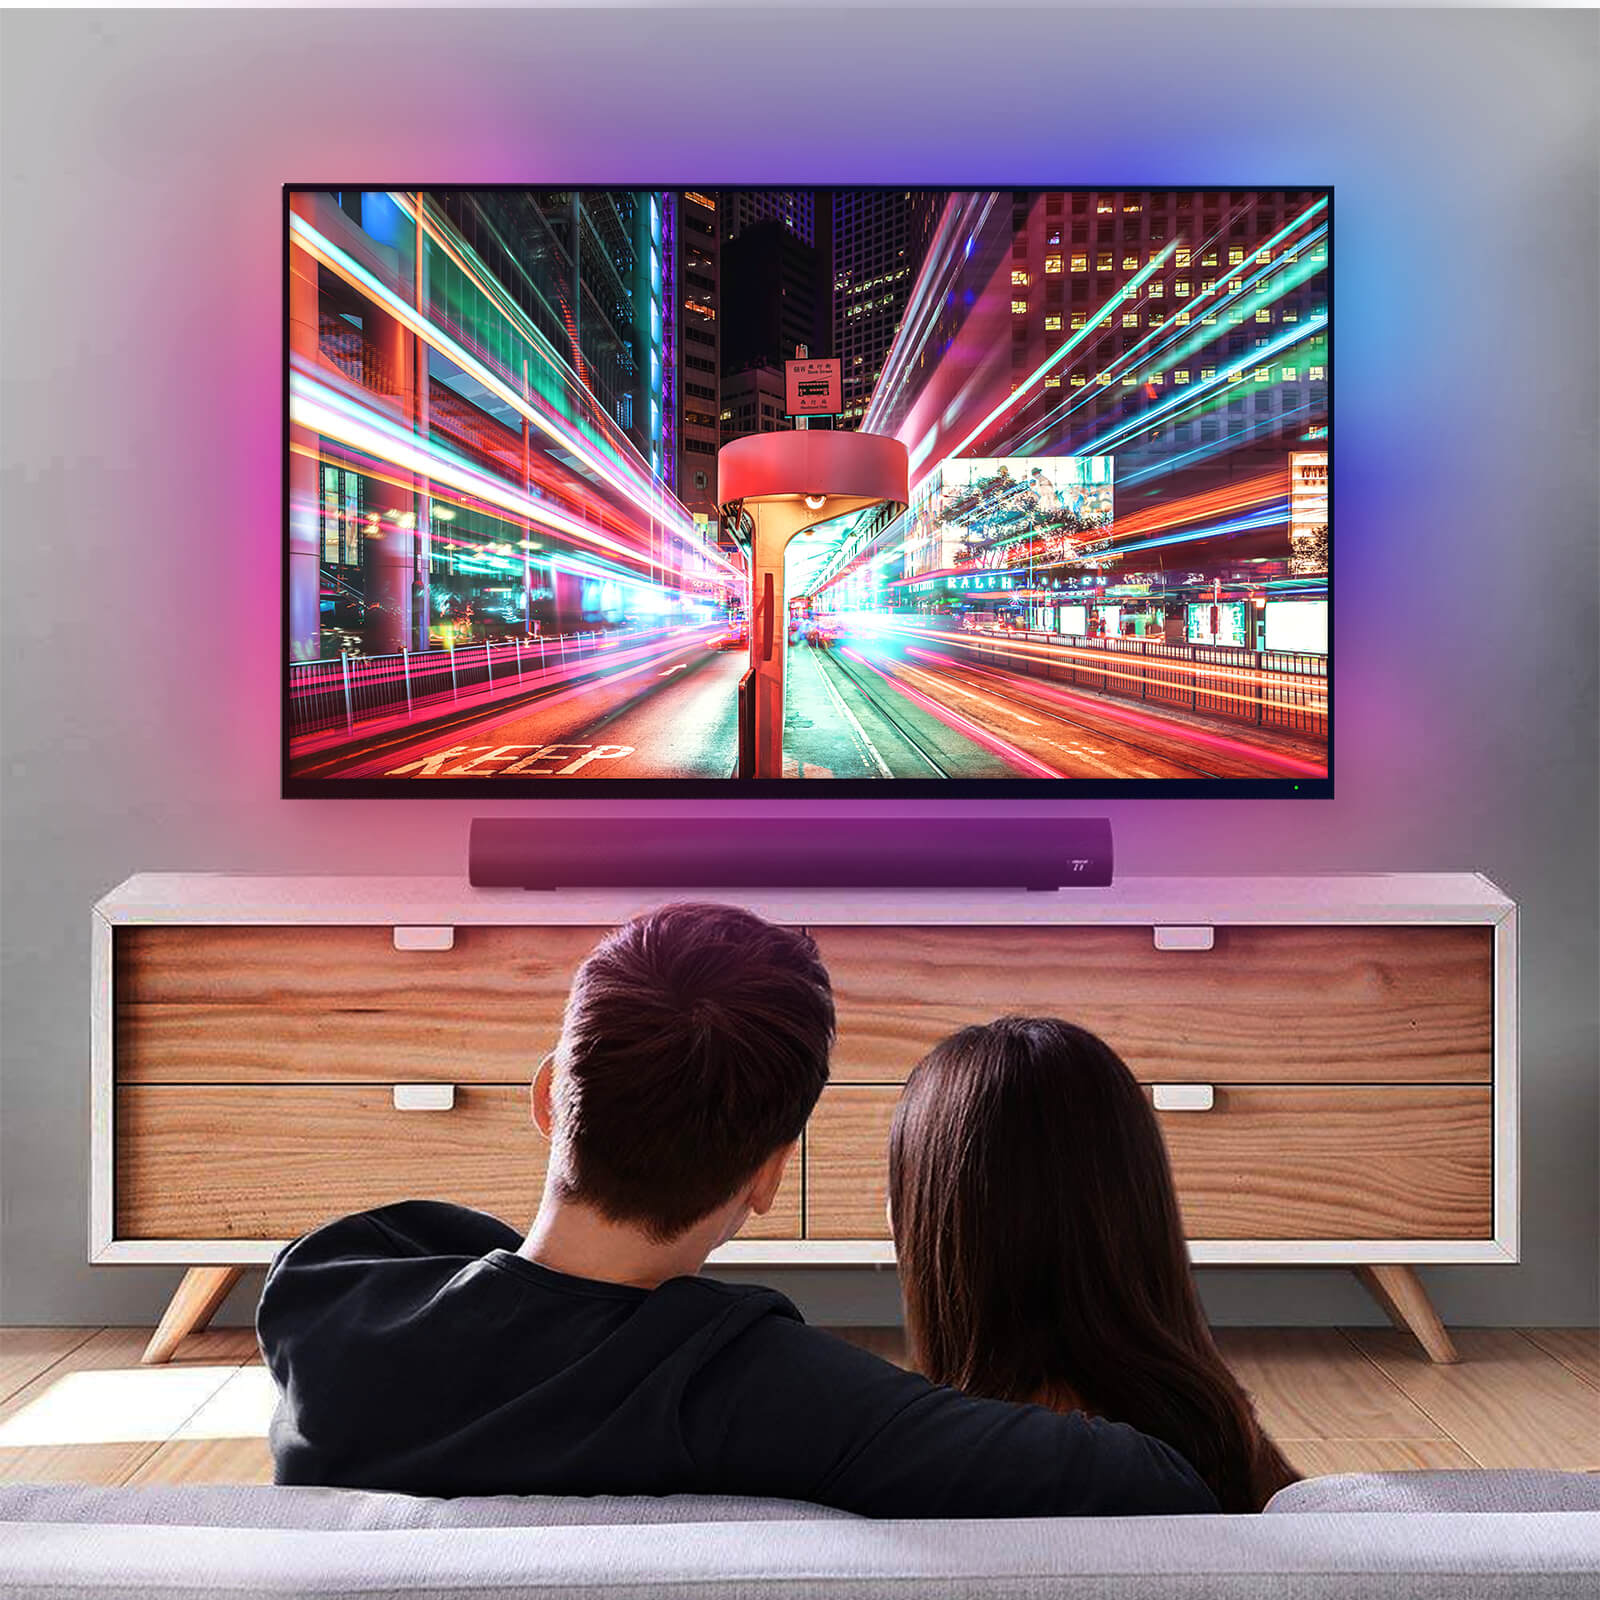 Sync smart lights to TV